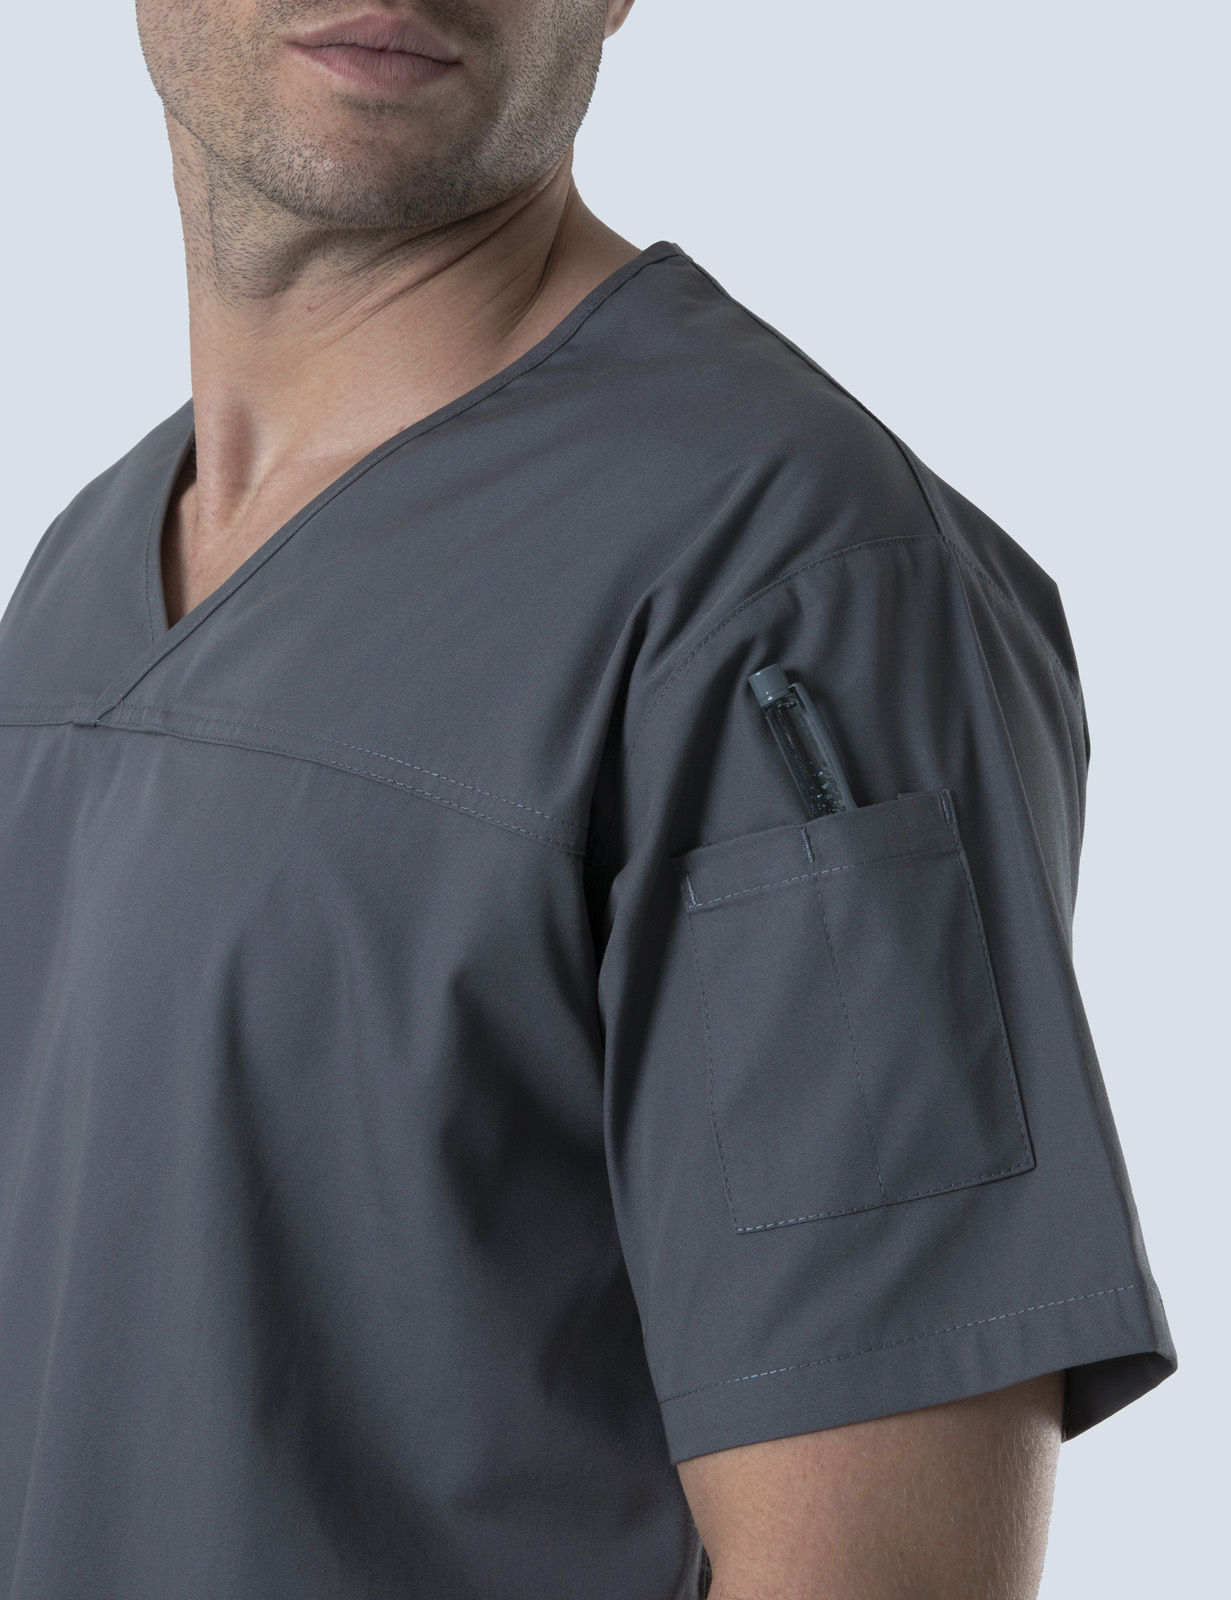 UQ Vets Gatton General Practitioner Uniform Top Only Bundle (Men's Fit Solid Top in Steel Grey incl Logos)